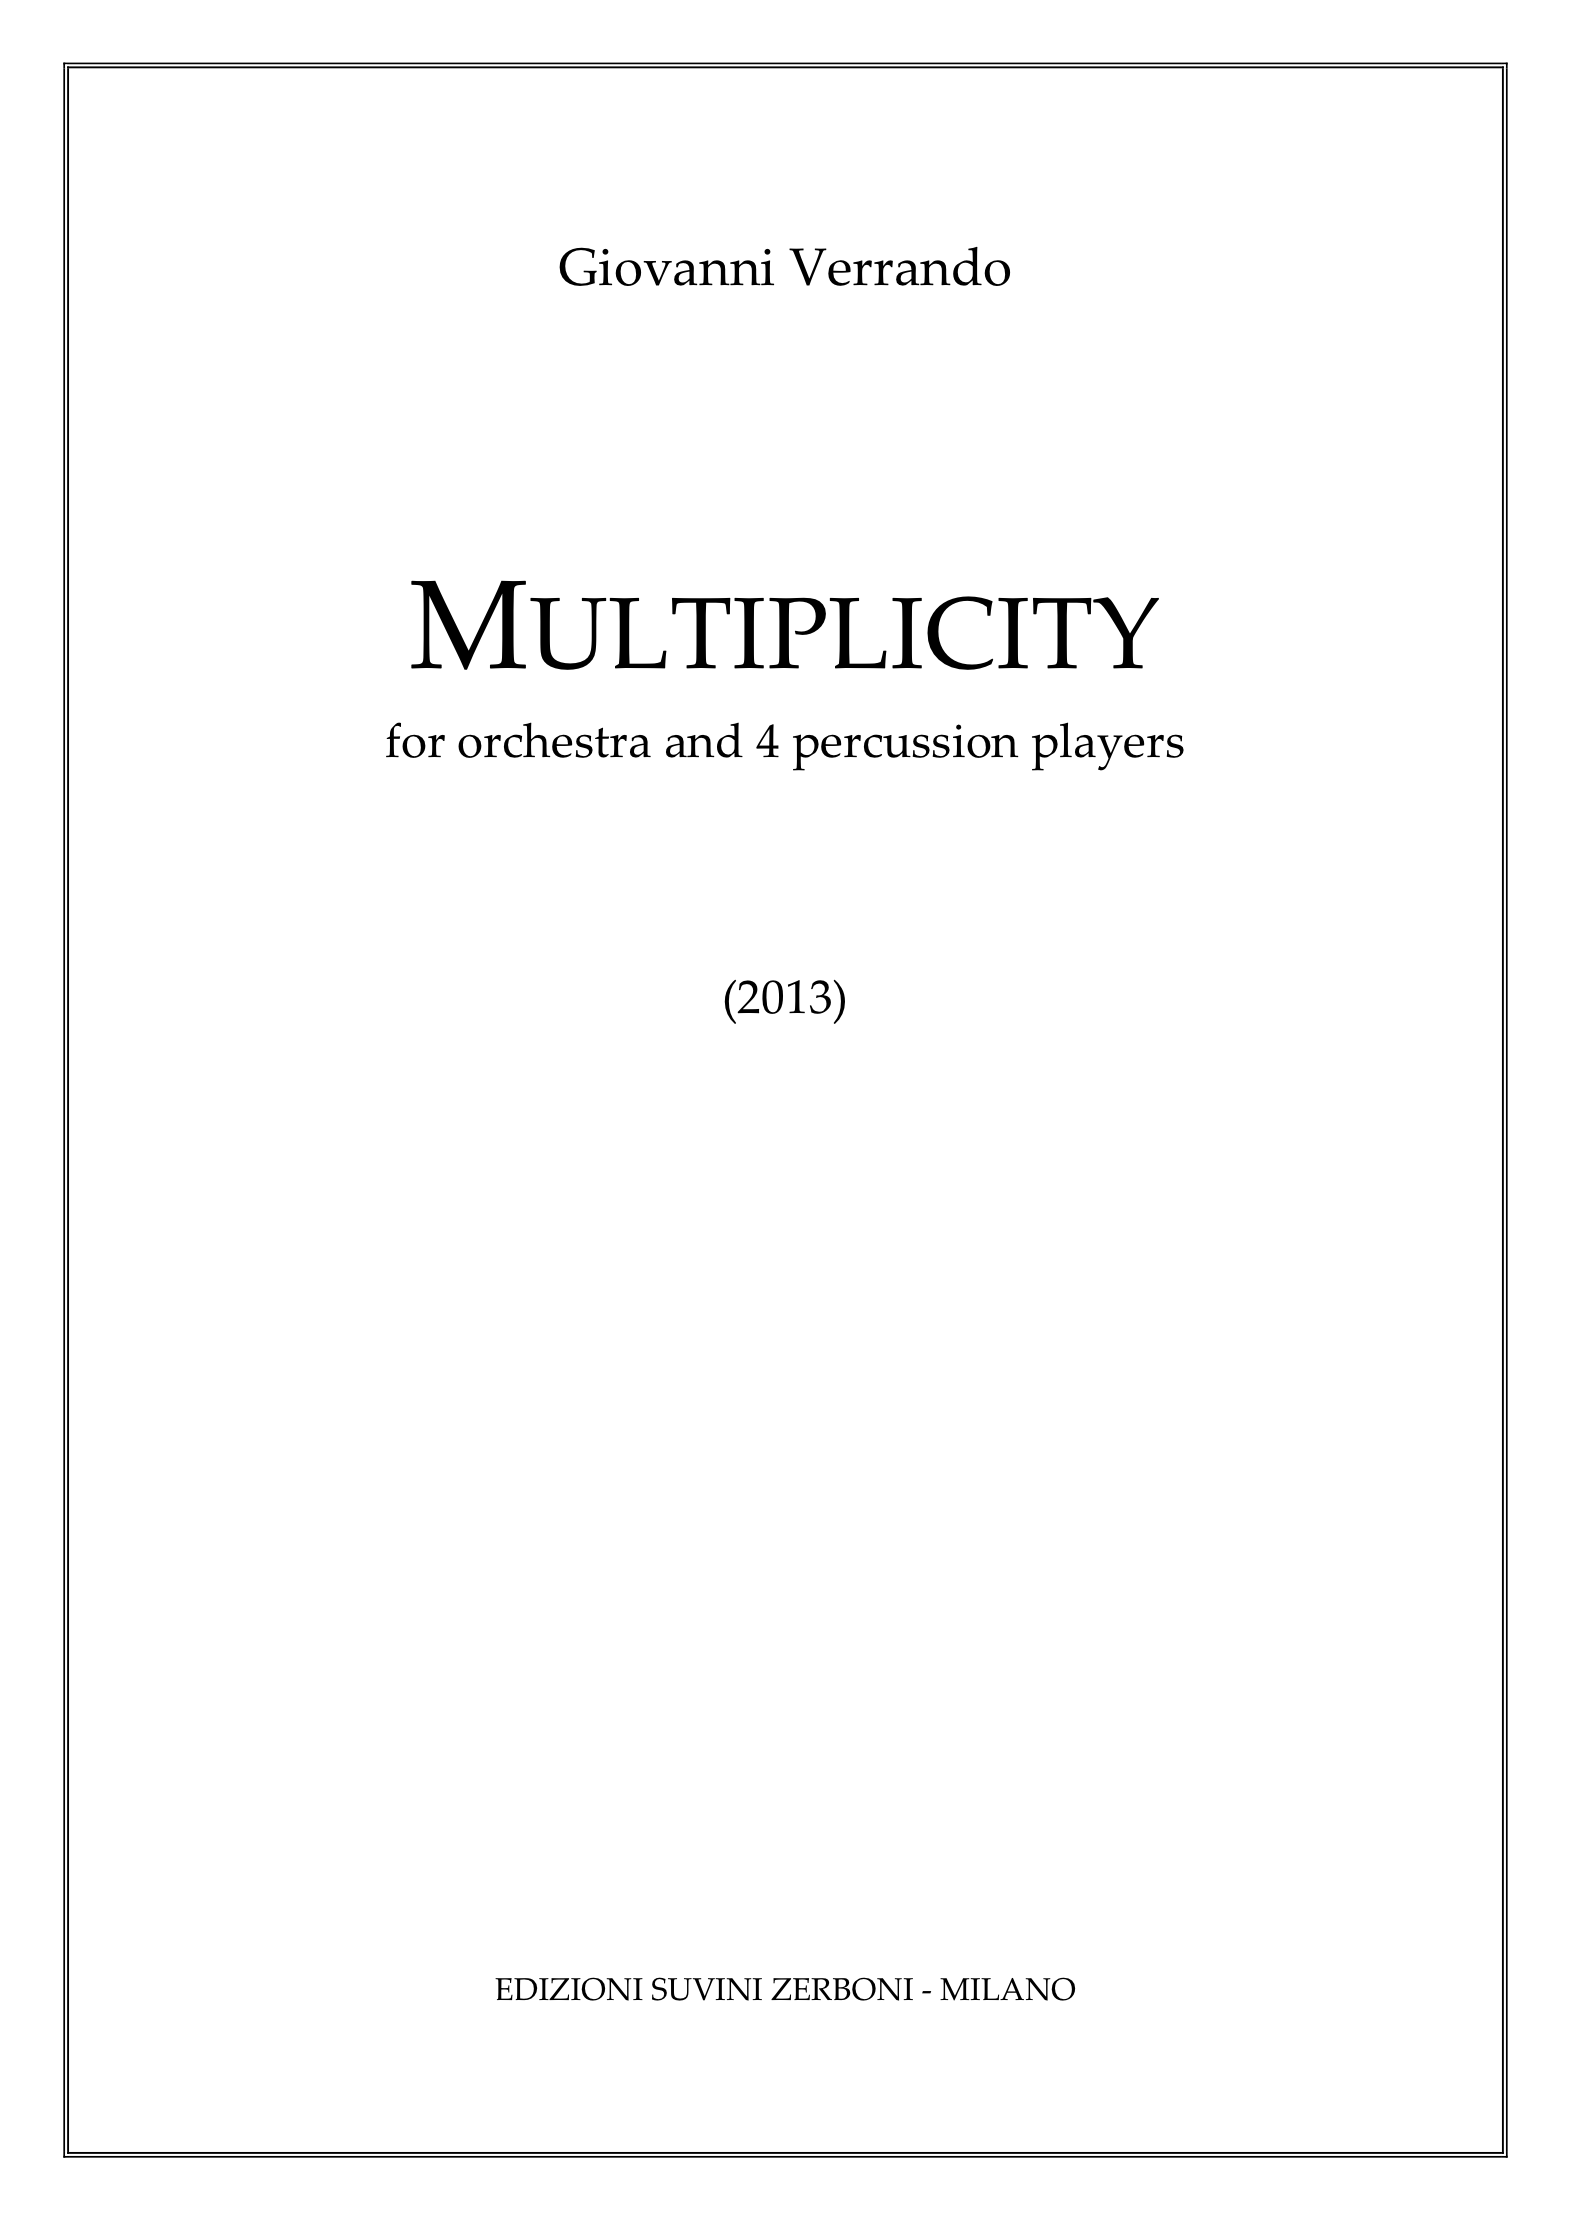 Multiplicity_Verrando 1